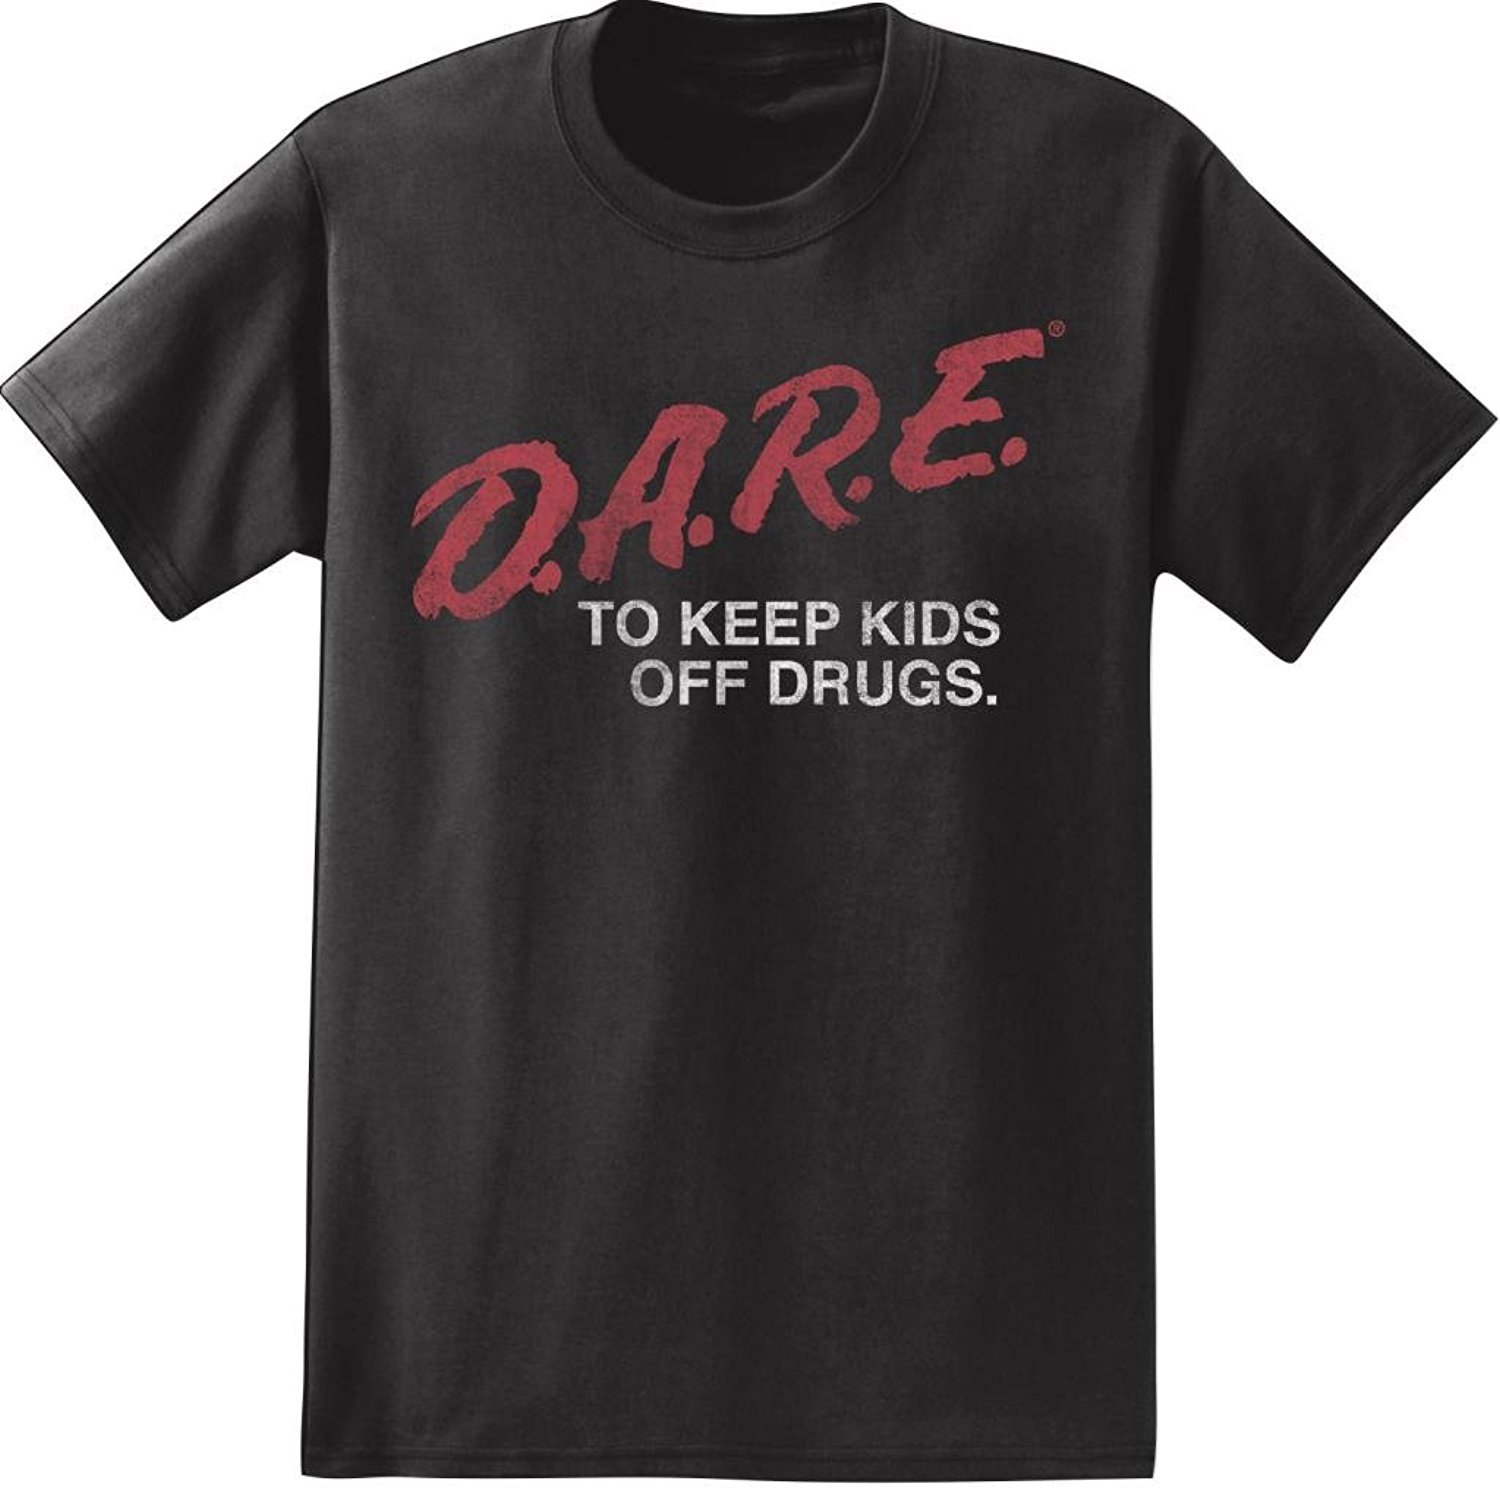 Dare D.A.R.E. Keeping Kids Off Drugs Pullover Hoodie Sweatshirt Darren lion L